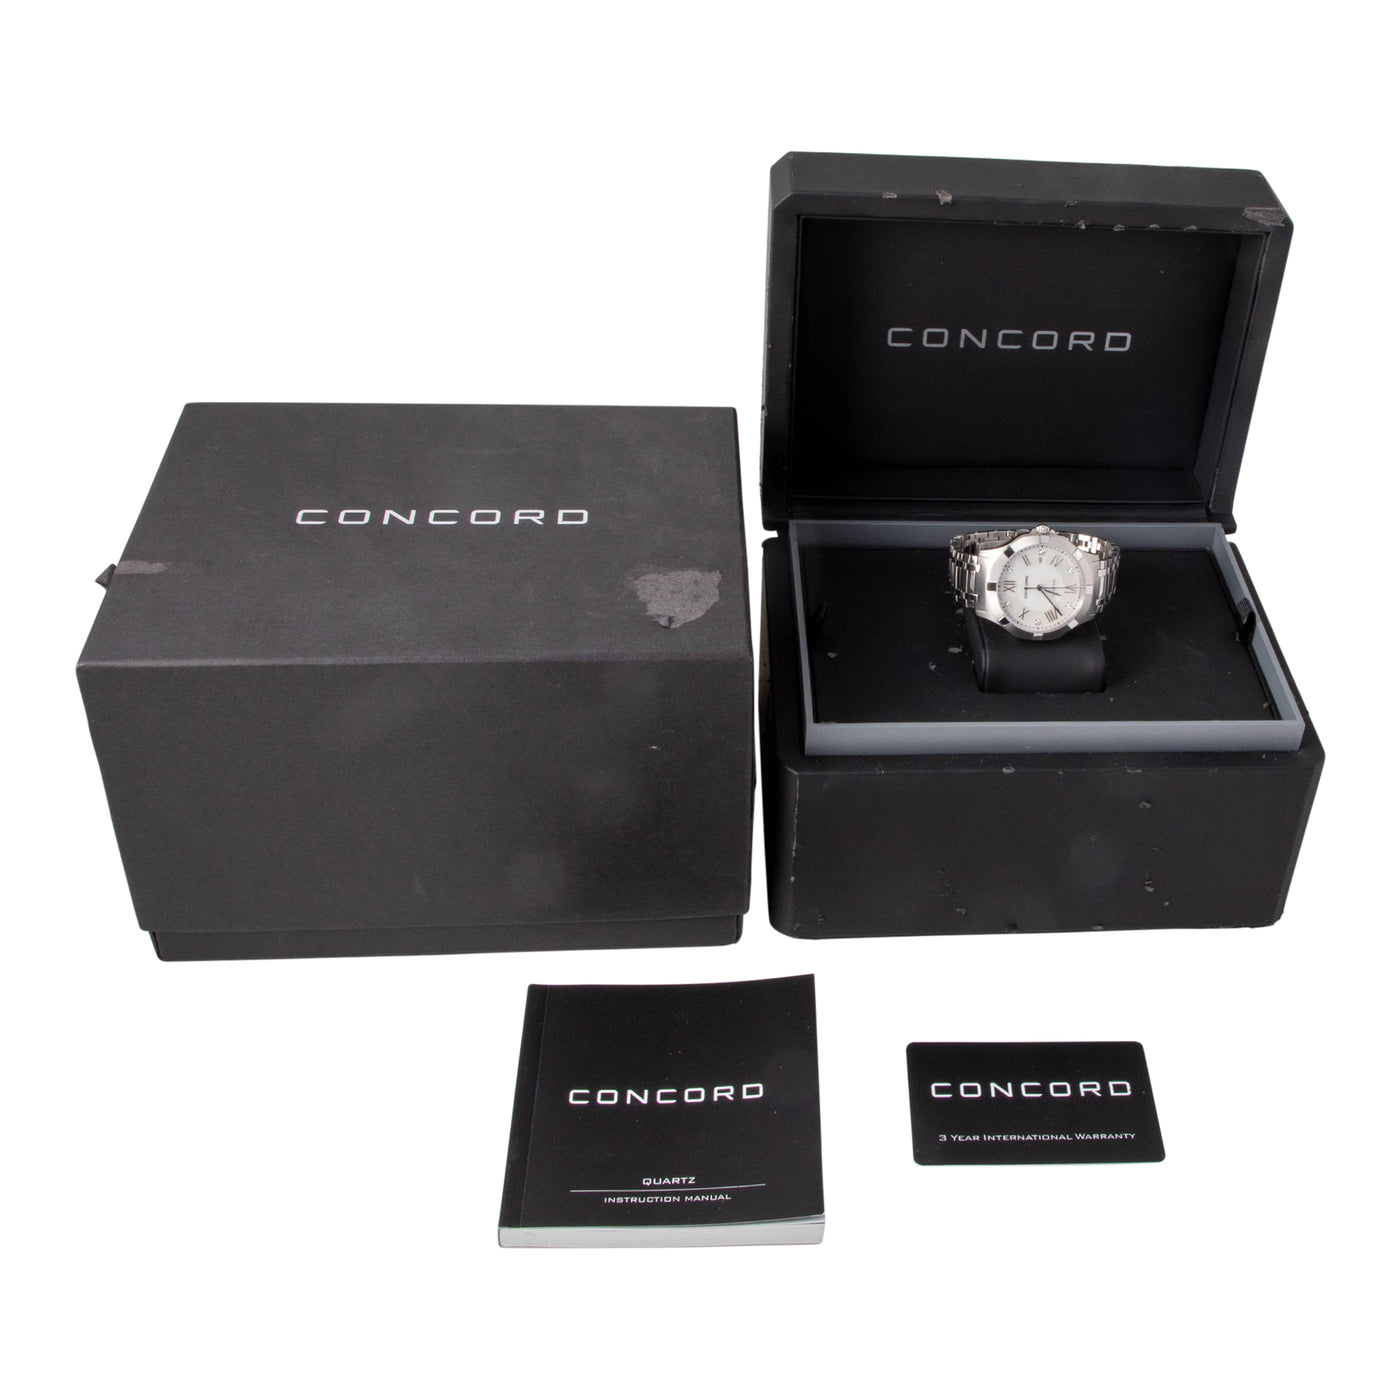 Concord Saratoga 0320156 full set | Timepiece360